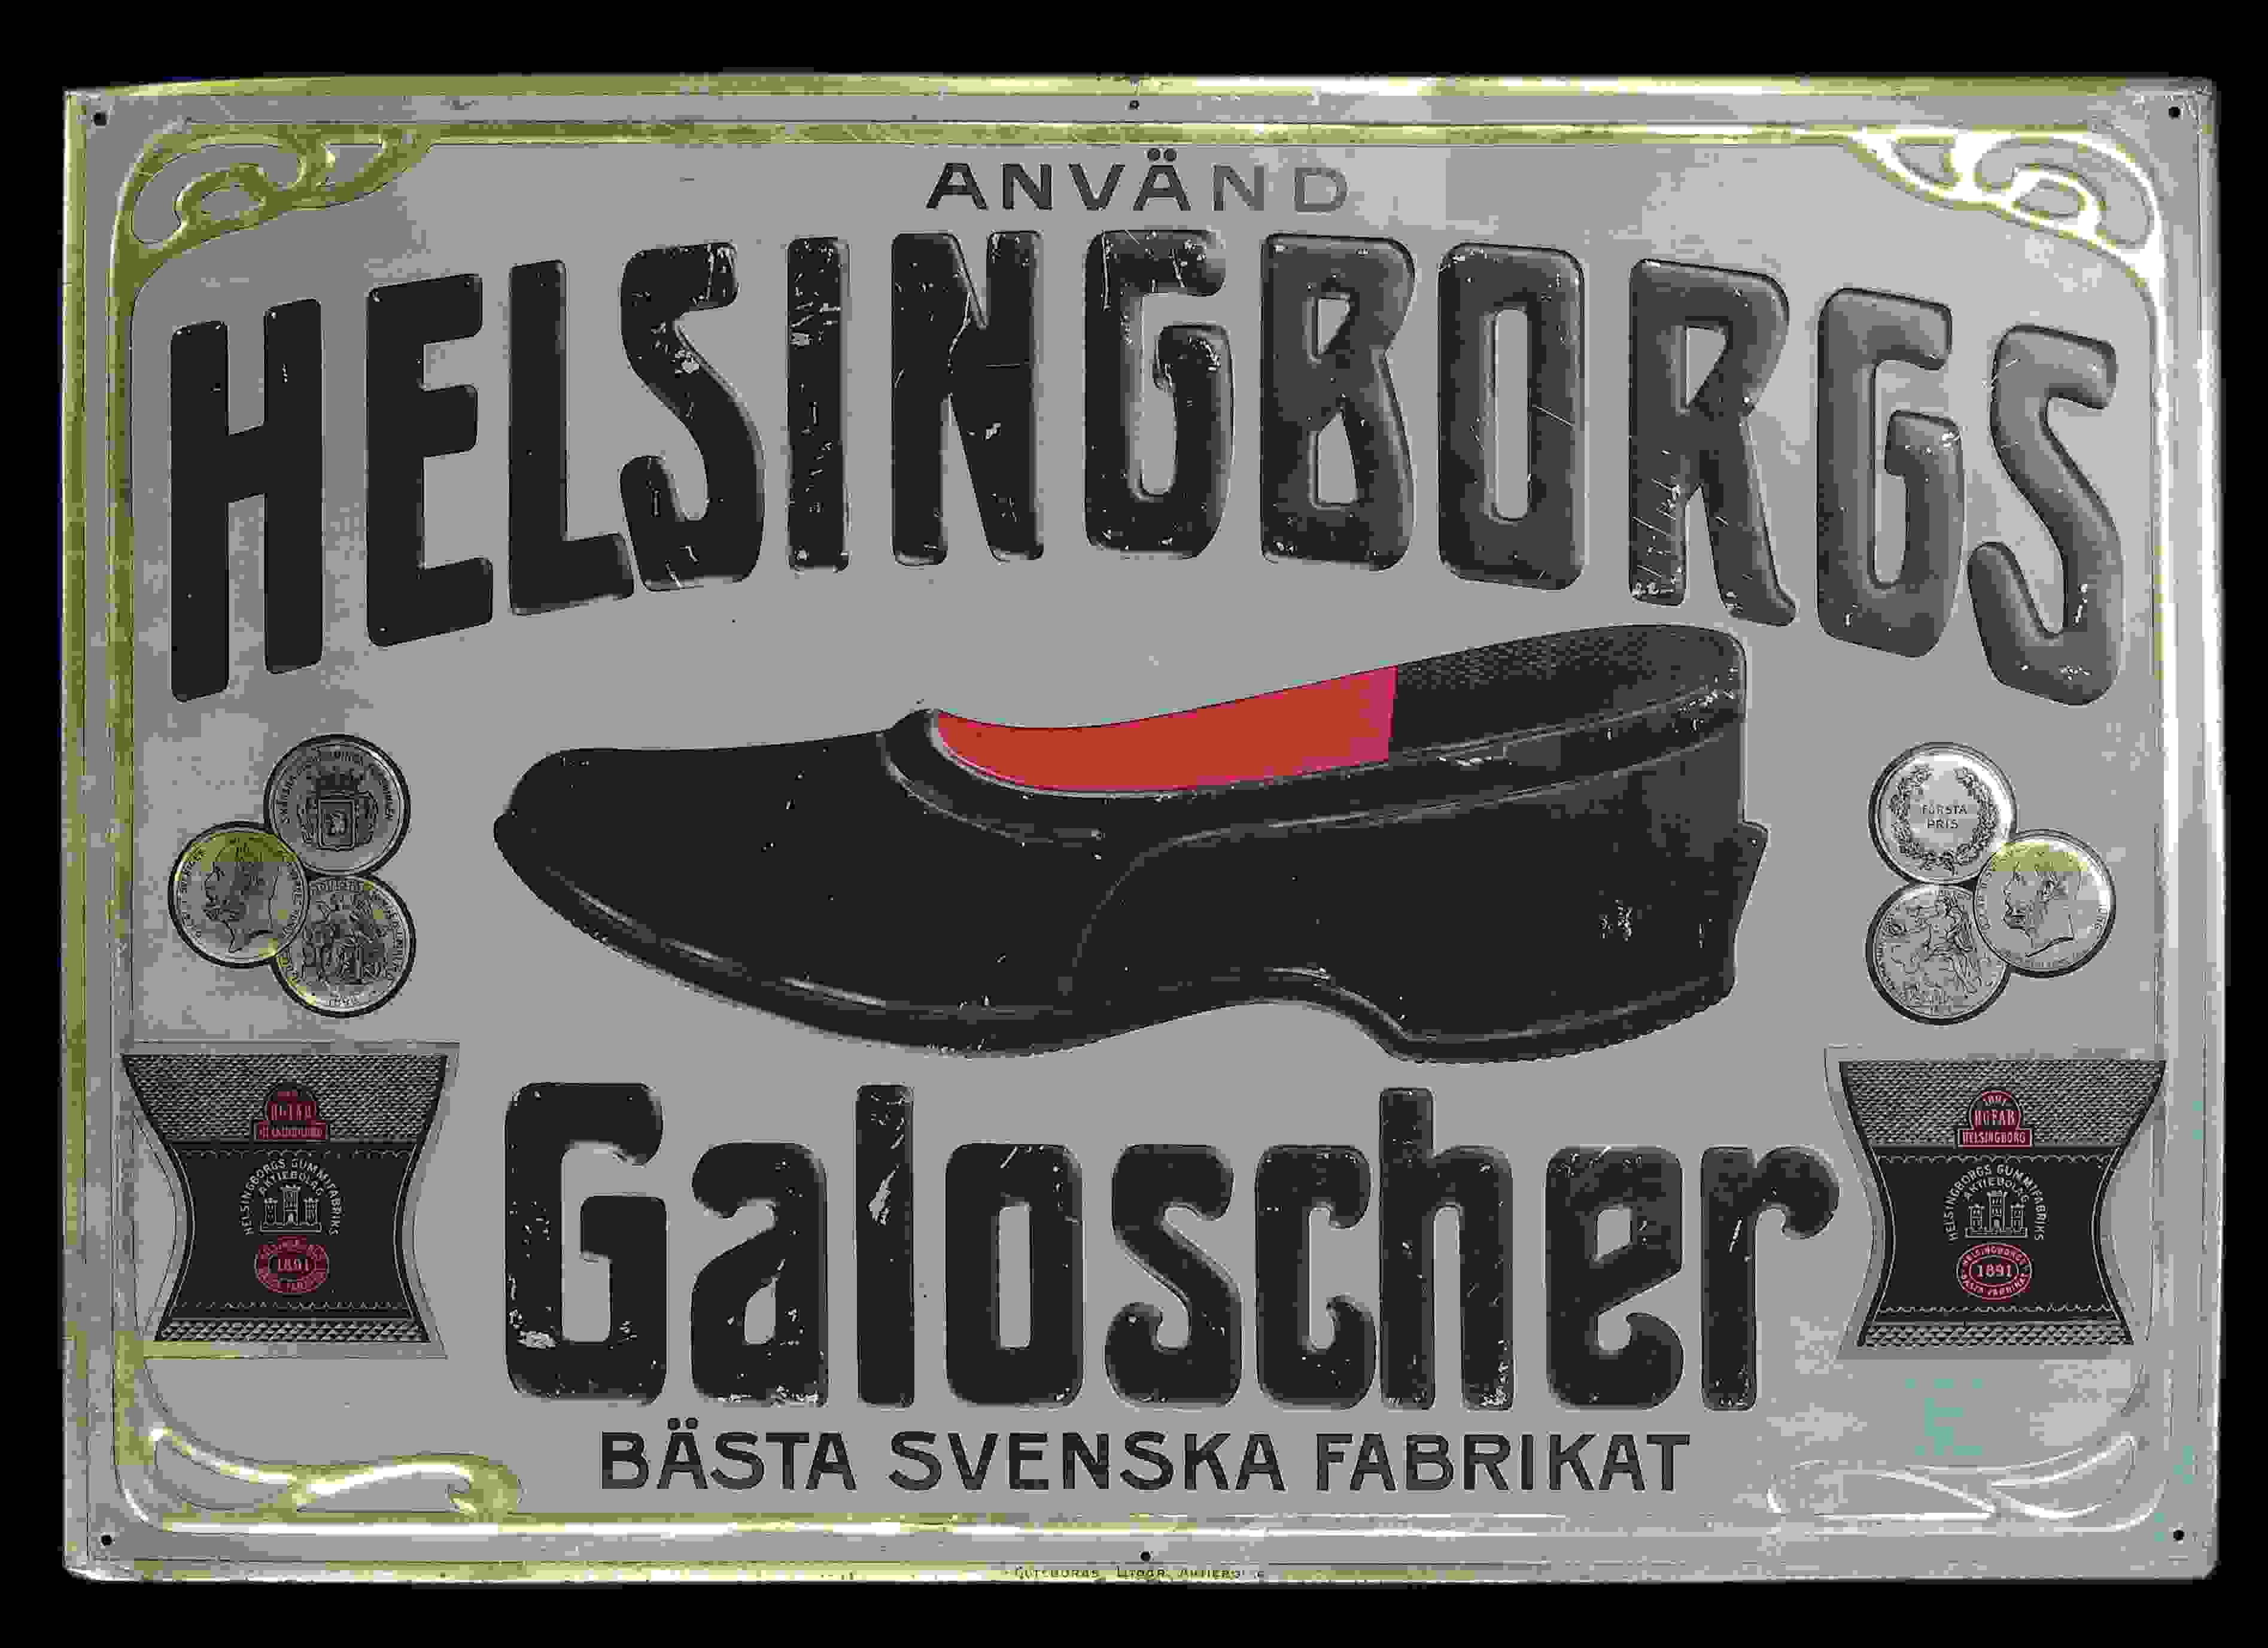 Helsingborgs Galoscher 